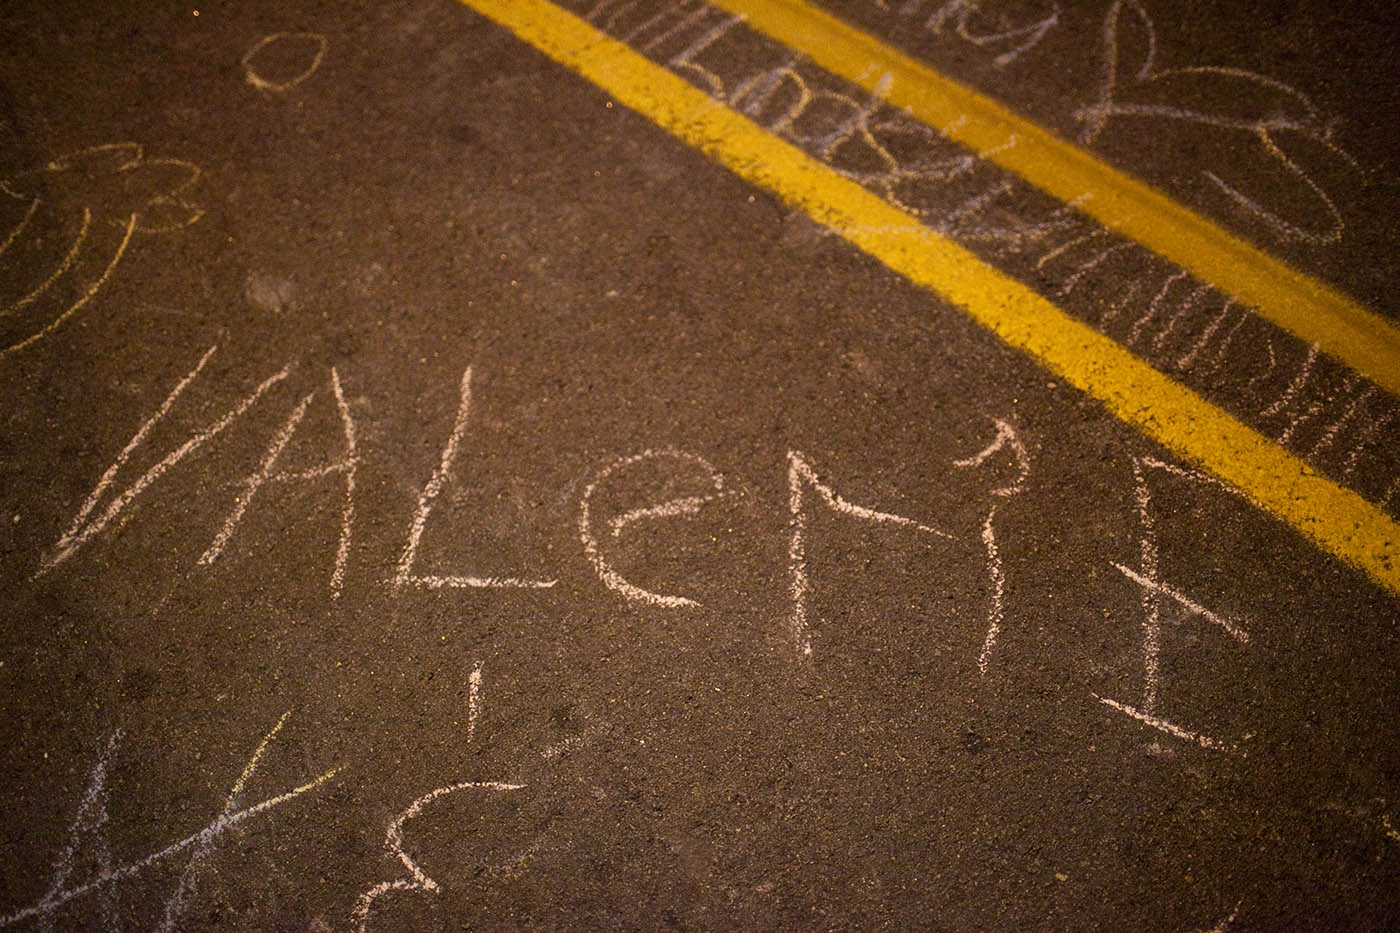 Valerie in chalk on the ground